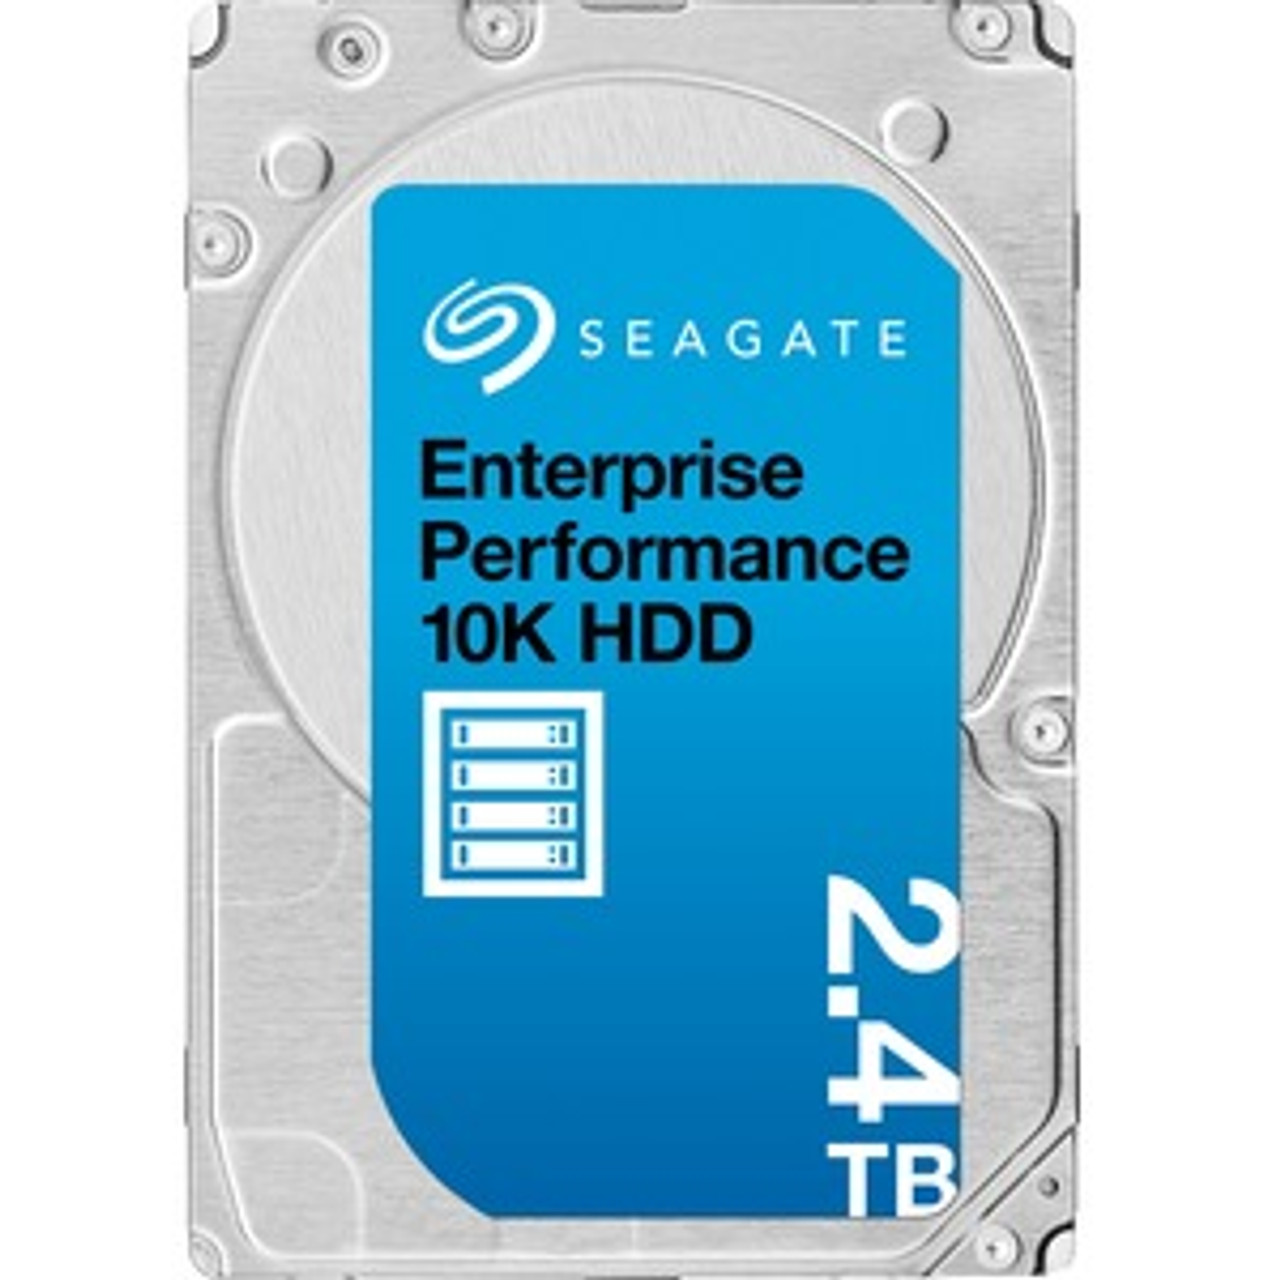 ST2400MM0149-40PK Seagate Enterprise Performance 10K 2.4TB 10000RPM SAS 12Gbps 256MB Cache 16GB NAND SSD (SED-FIPS / 512e) 2.5-inch Internal Hybrid Hard Drive